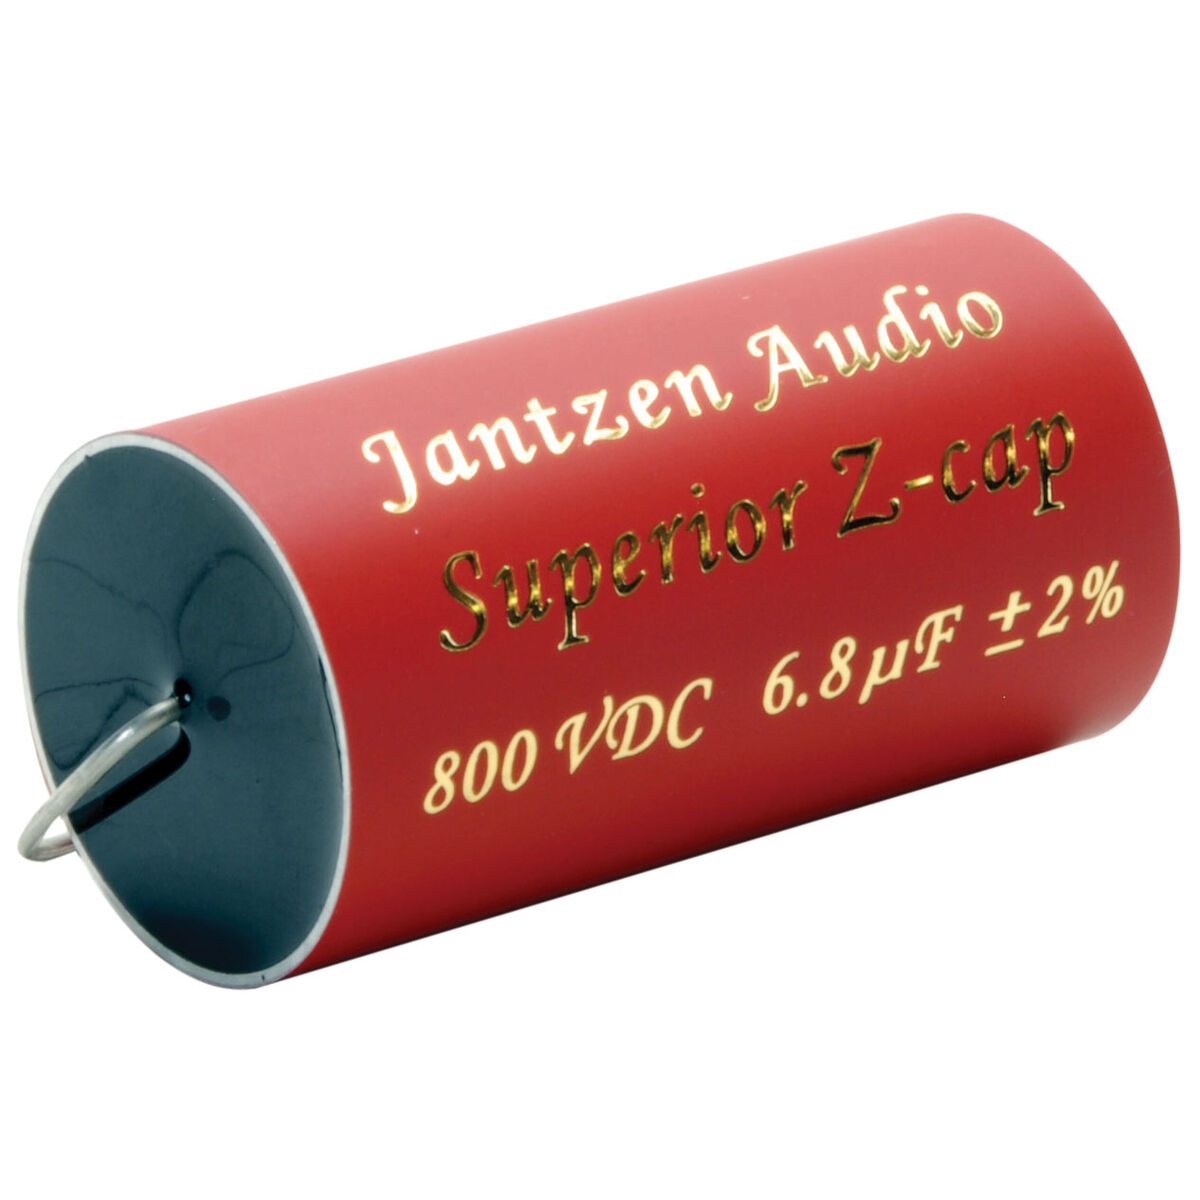 Jantzen Audio 6.8uF 400V Crosscap Capacitor